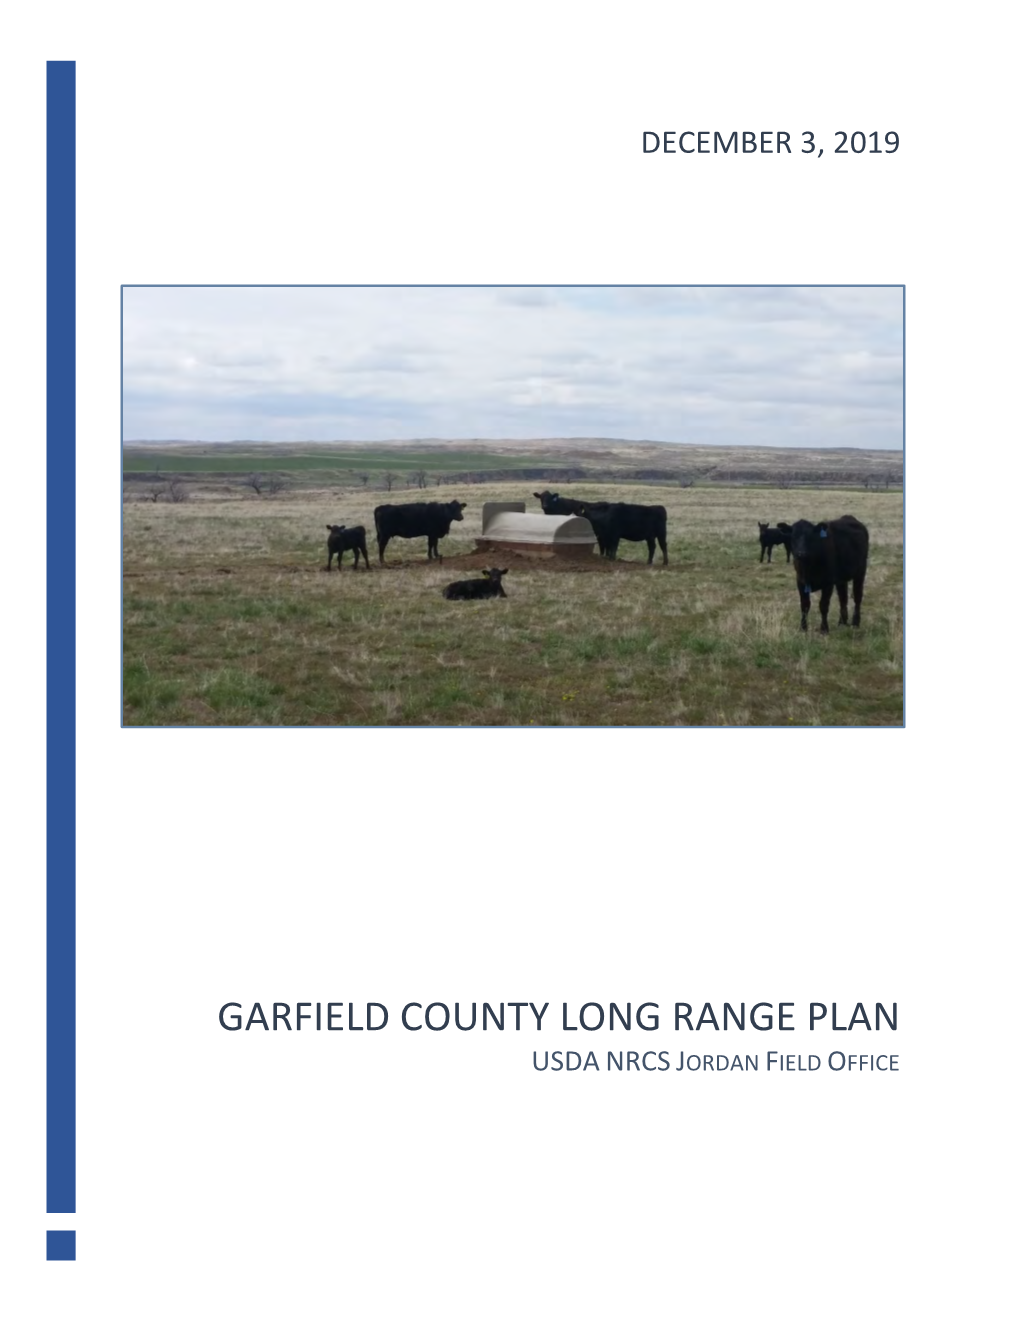 Garfield County Long Range Plan 2019